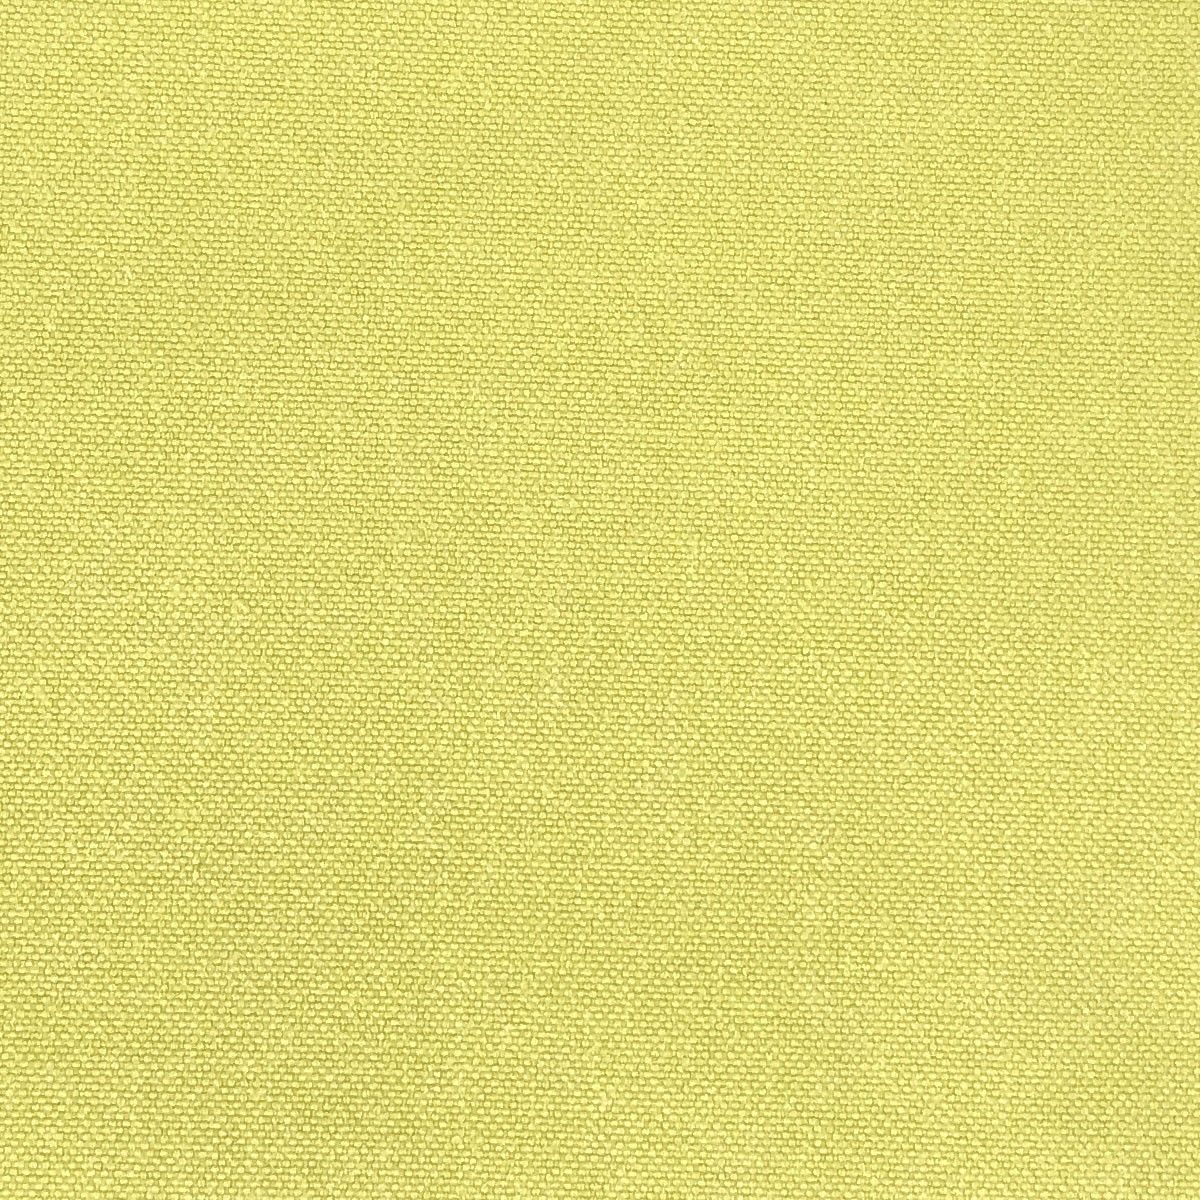 Glinara Lemongrass Fabric by Chatham Glyn